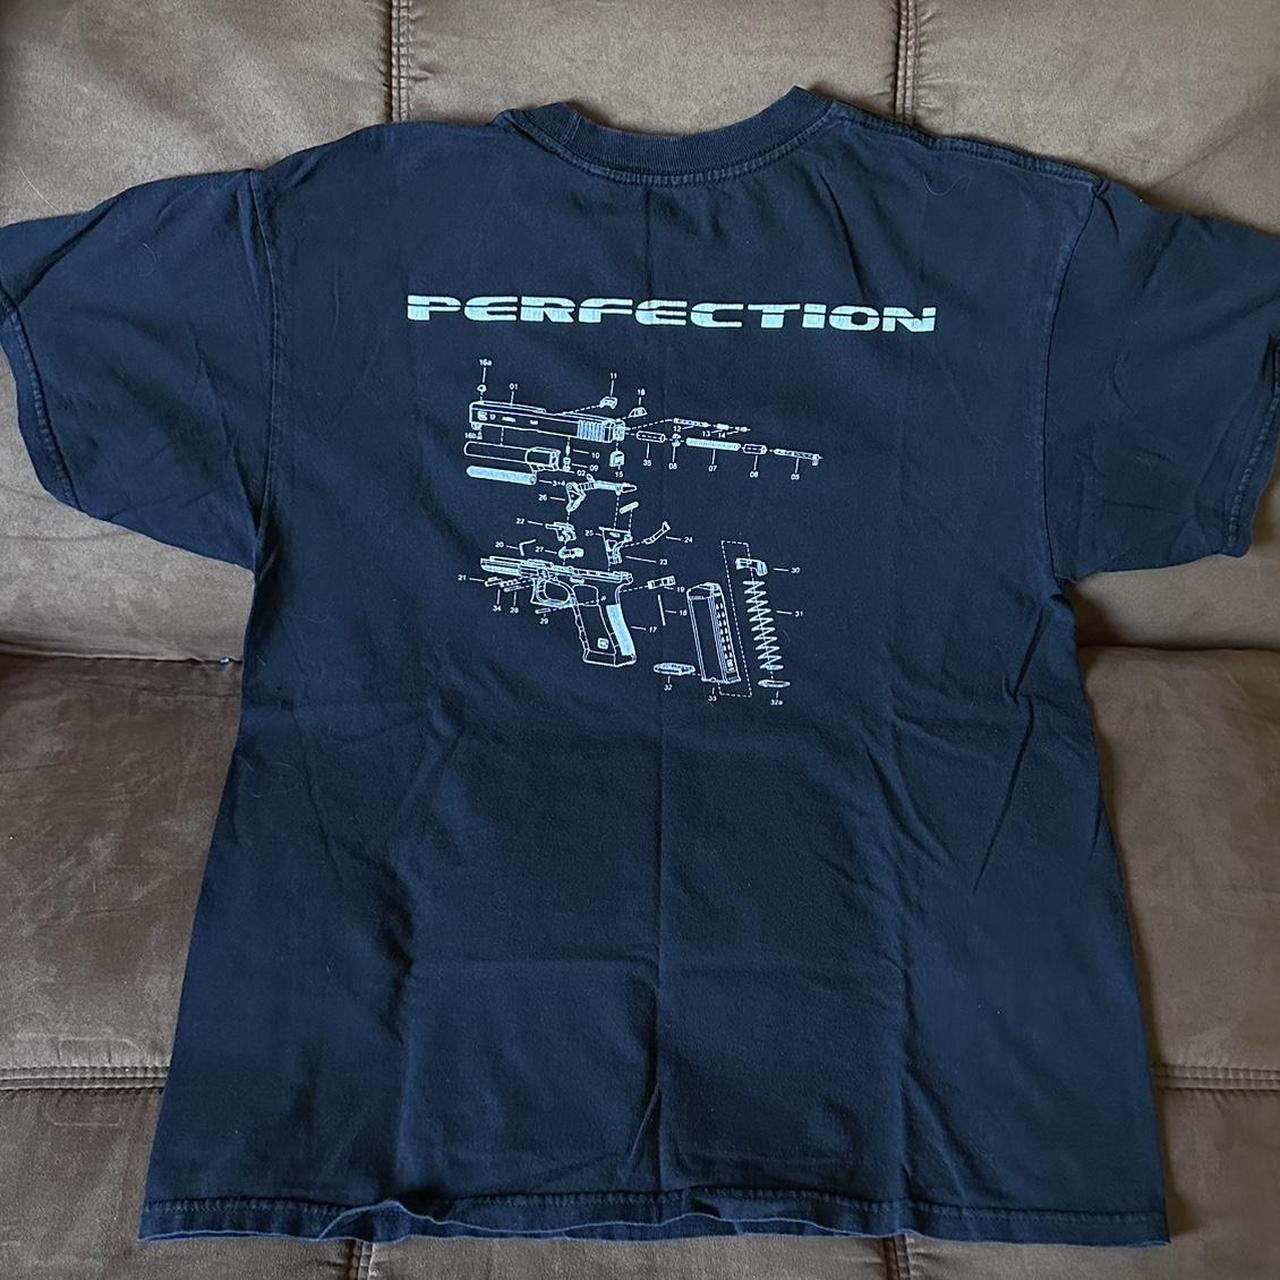 Glock T shirt size medium/large. If you’re... - Depop